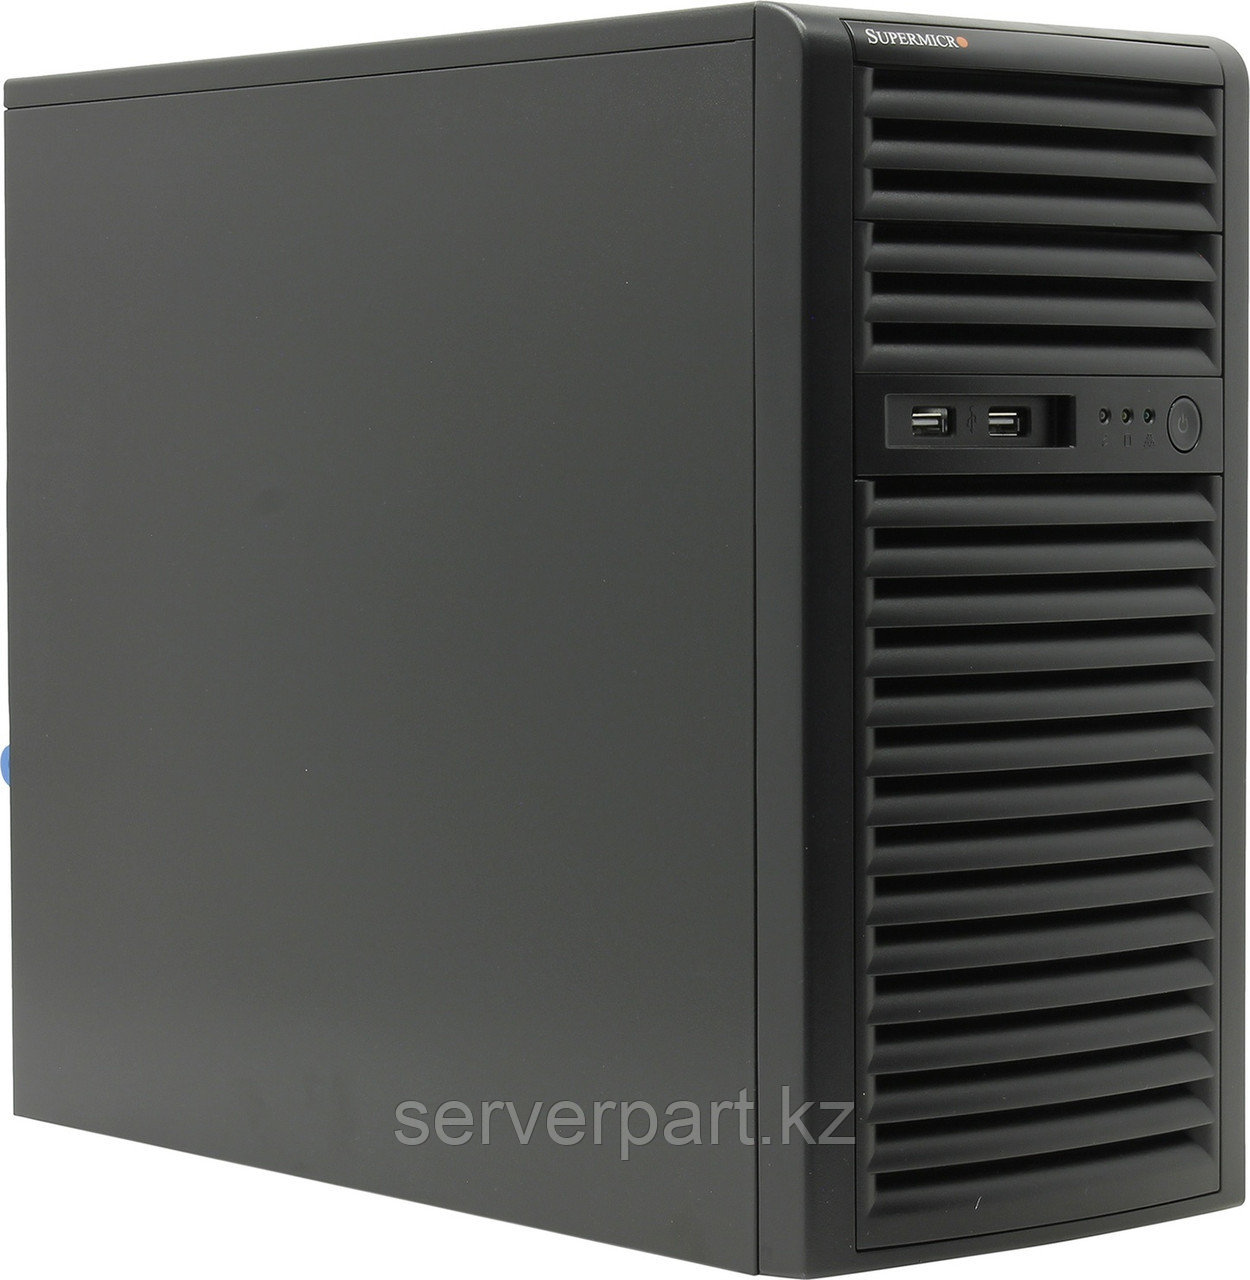 Сервер Supermicro SYS-5039C (Tower 4LFF)/4-core intel xeon E2224 (3.4GHz)/64GB EUDIMM, фото 1